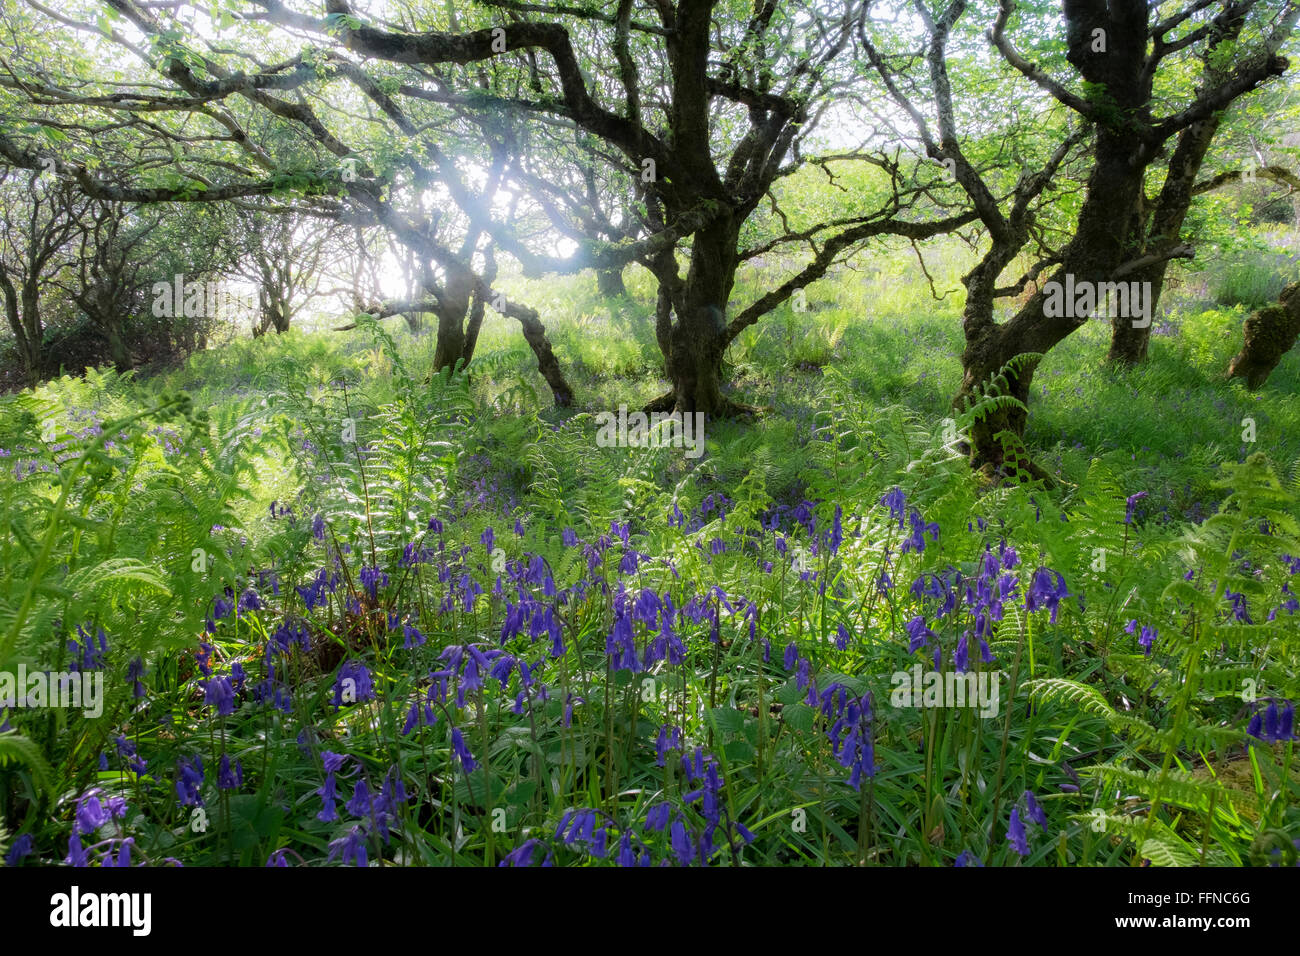 bluebells or wild hyacinths in hornbeam wildwood at springtime with sunshine Stock Photo